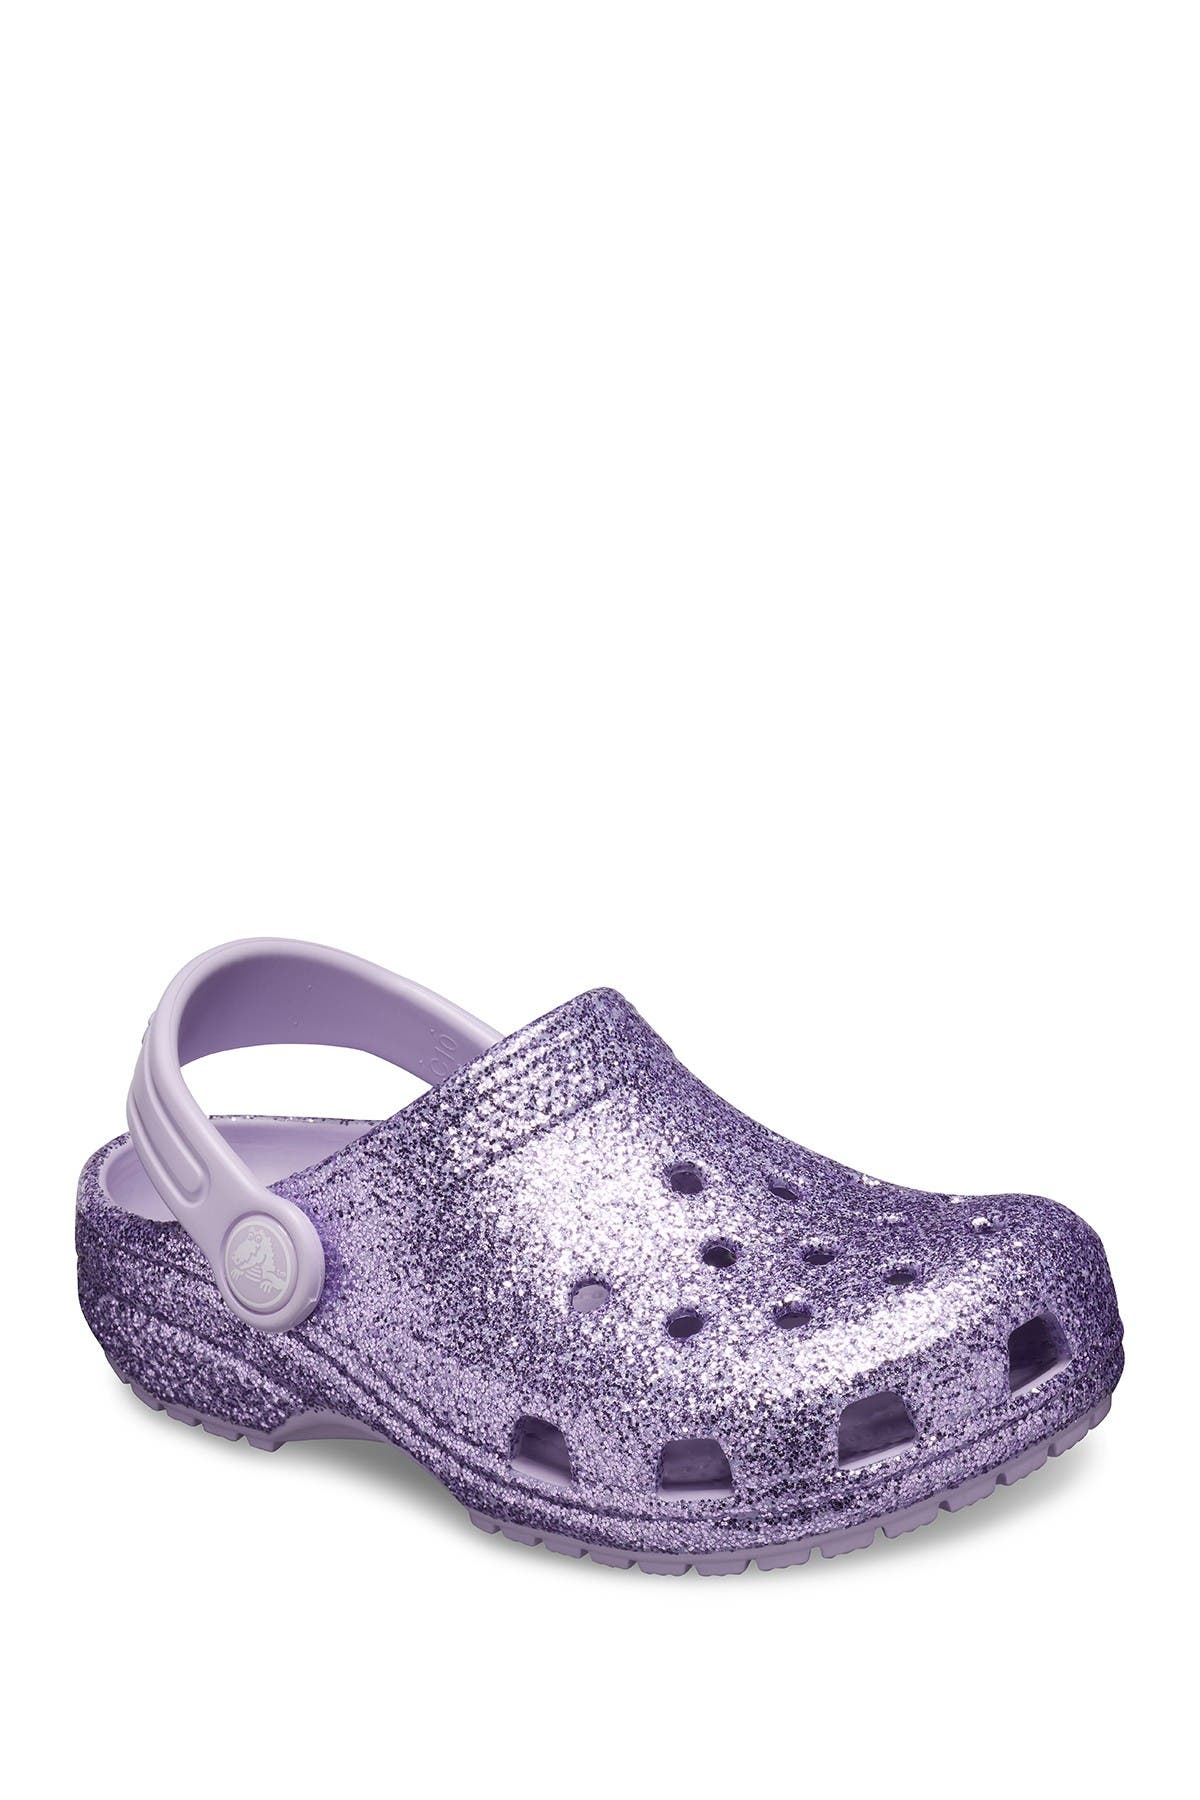 glitter crocs size 4